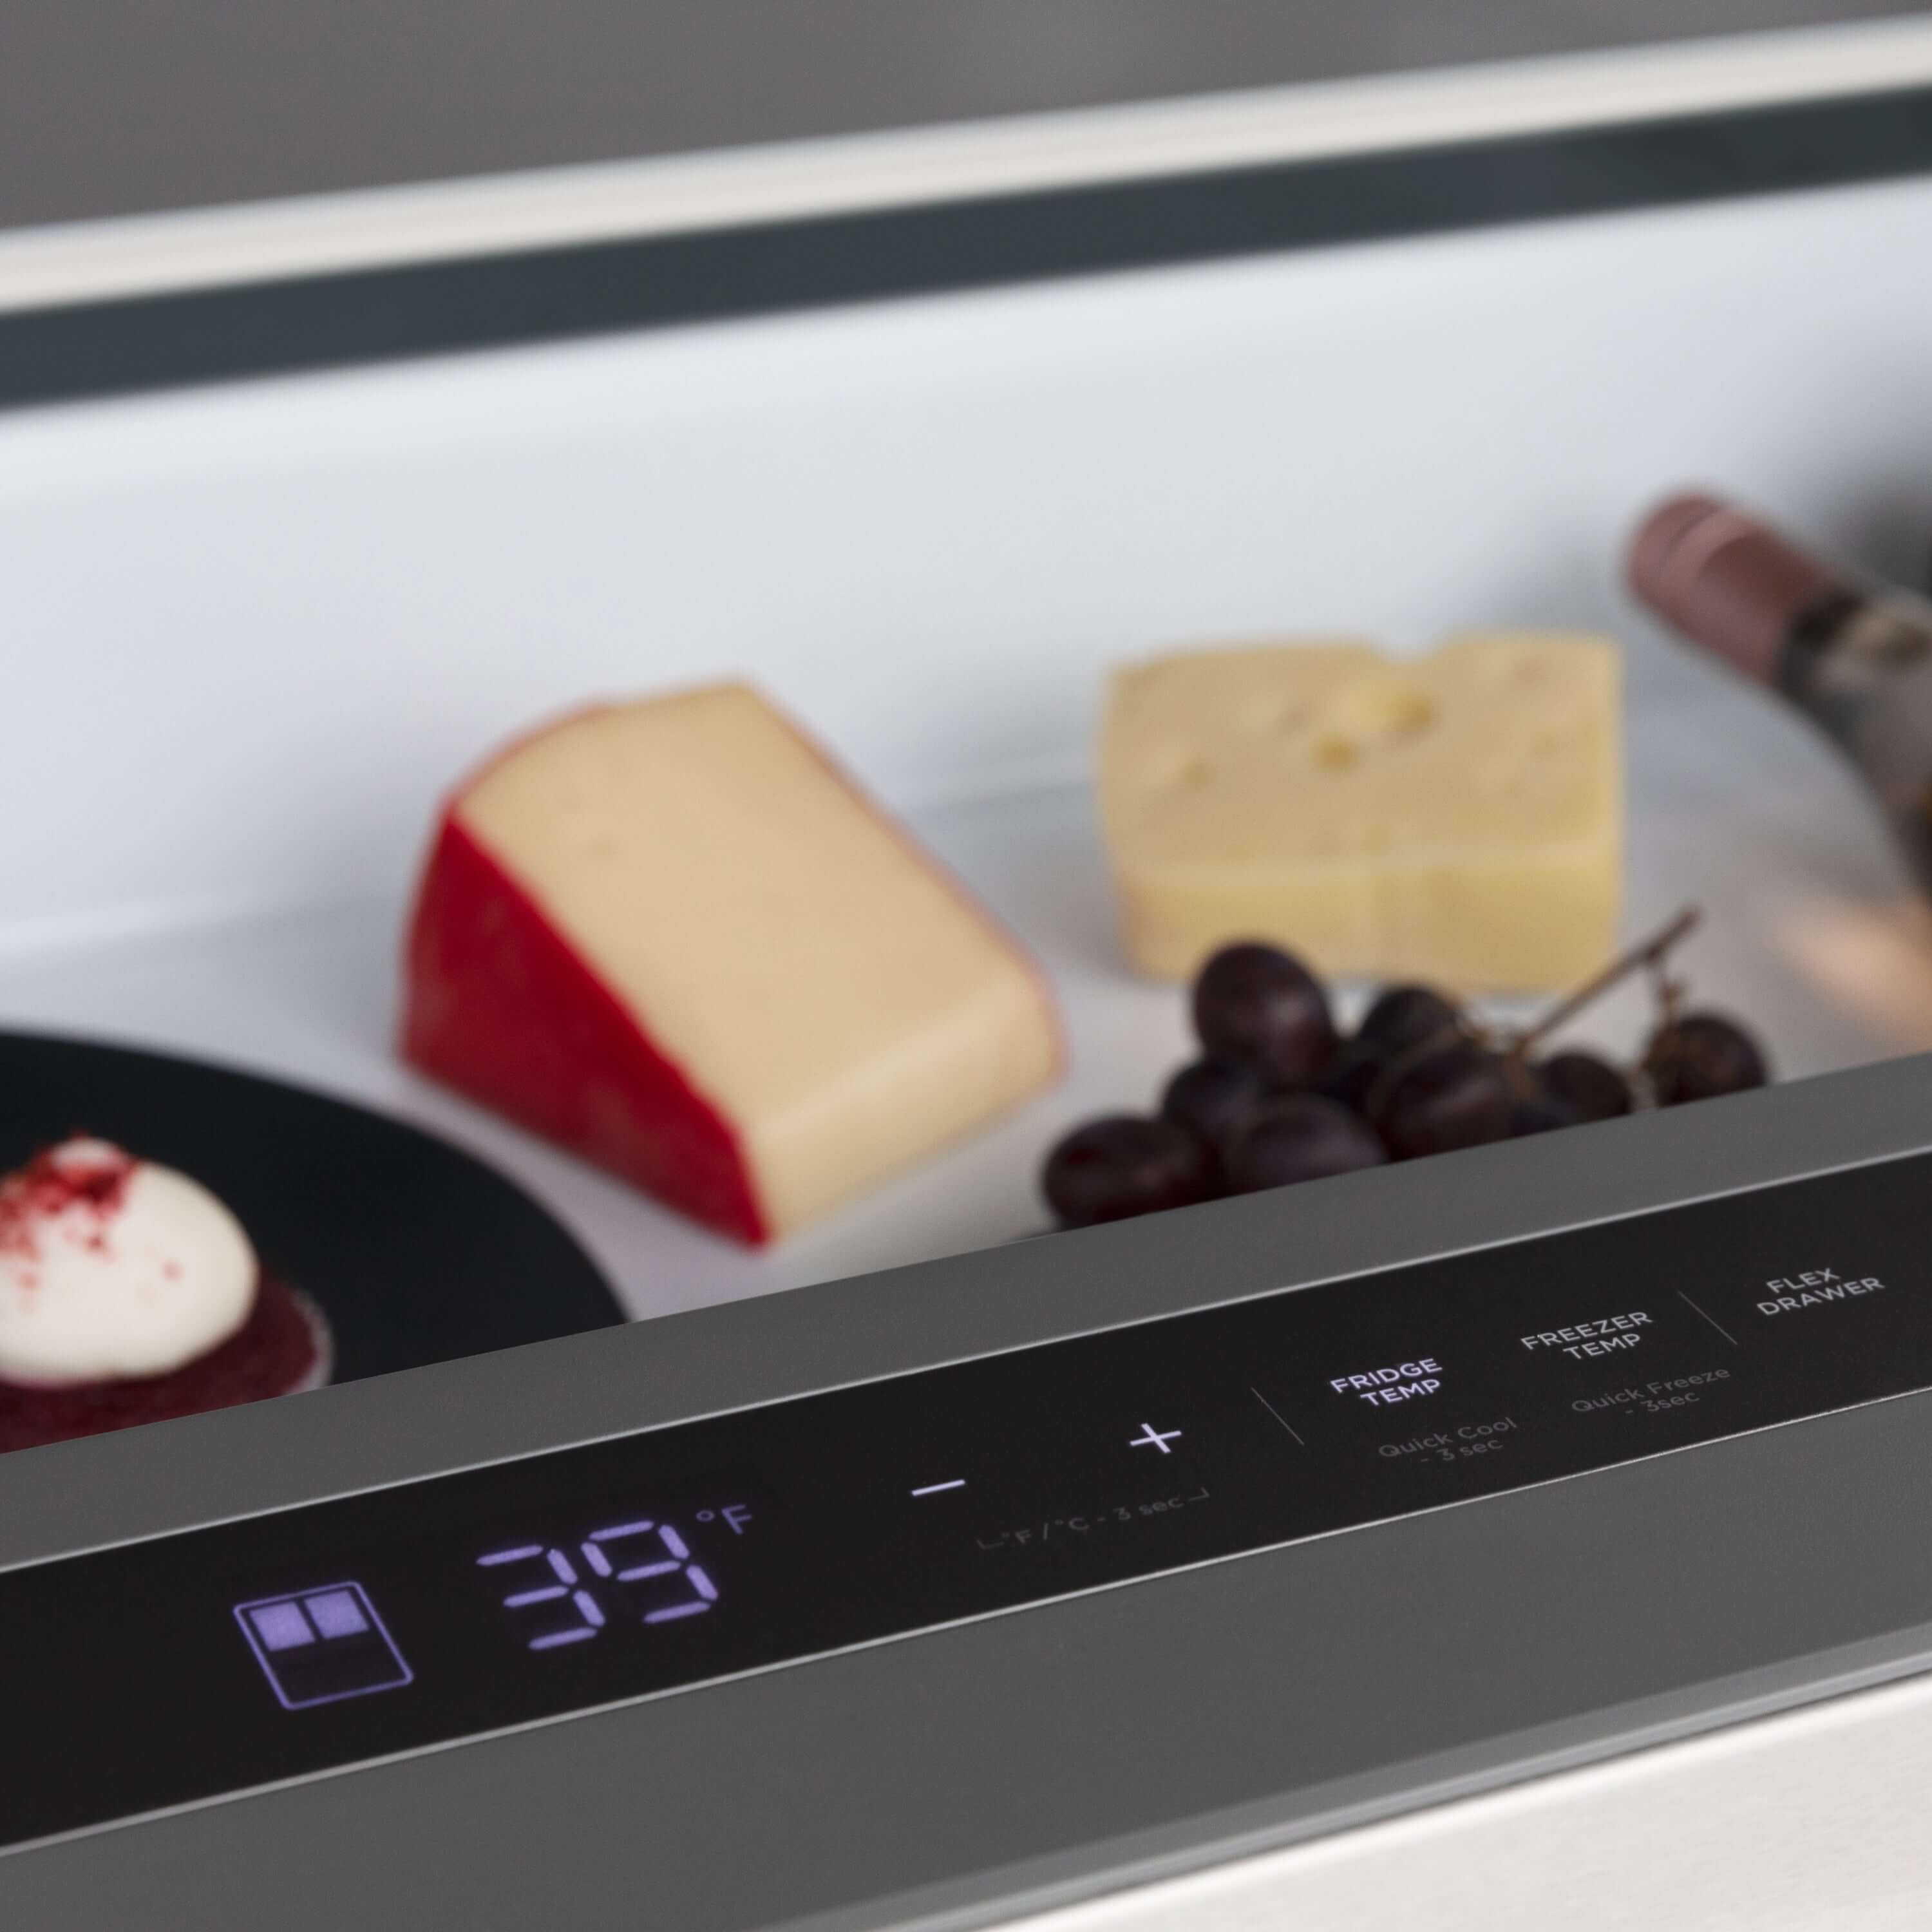 Internal adjustable temperature controls on ZLINE refrigerator.